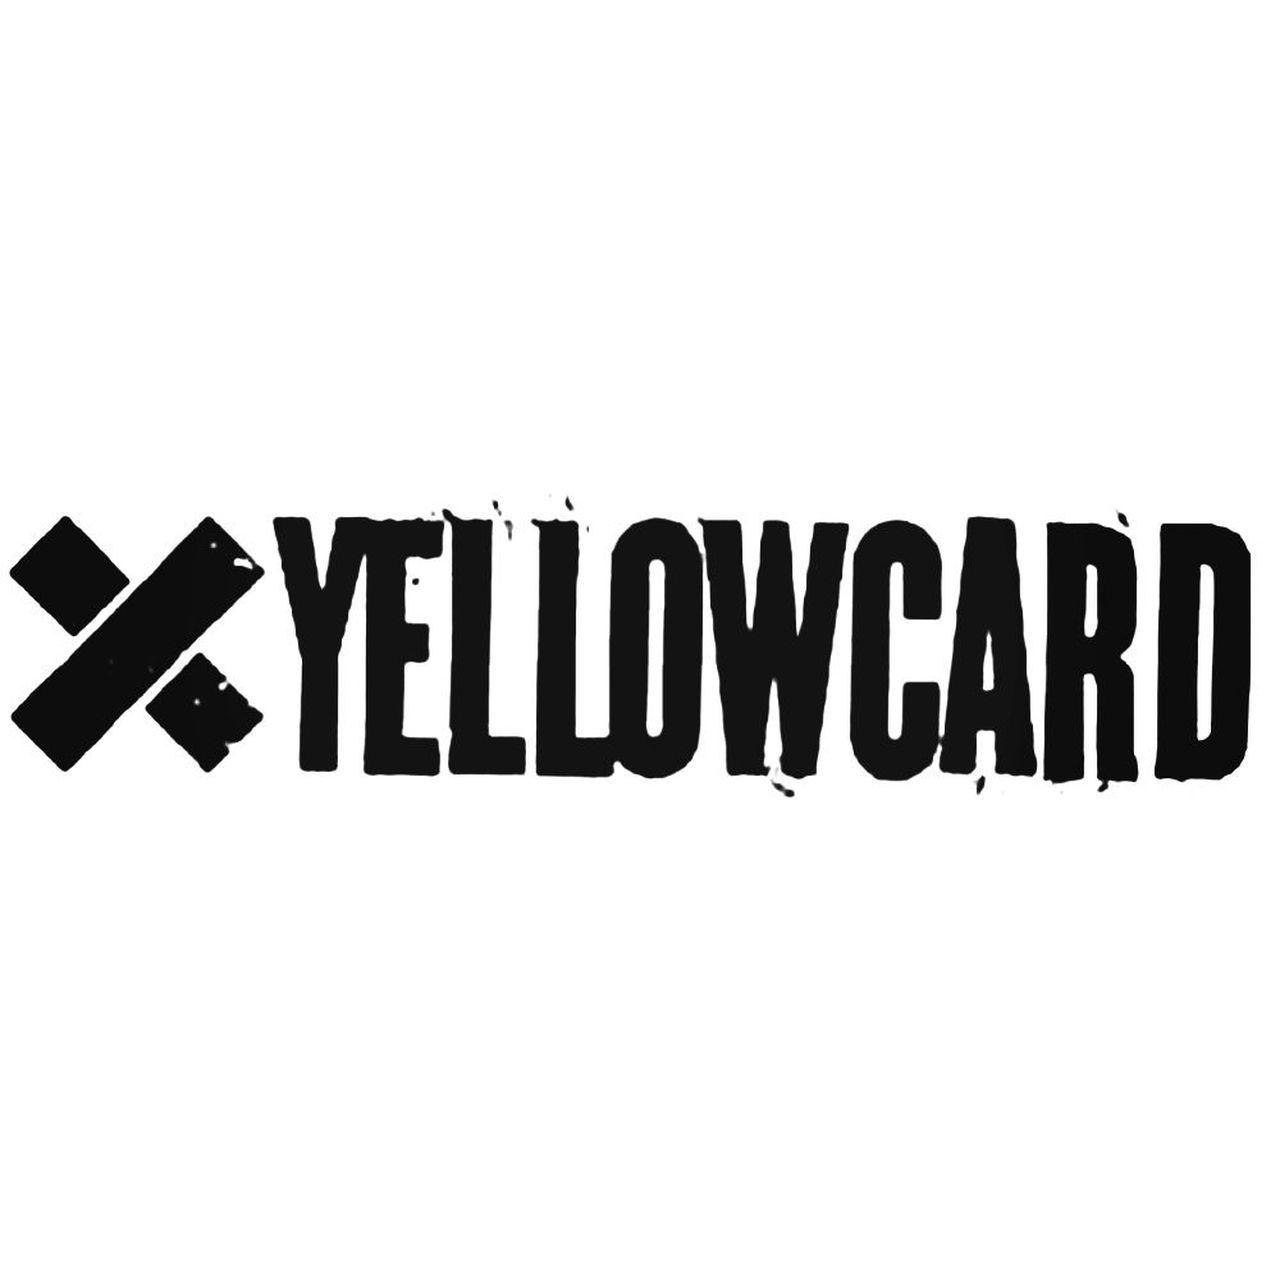 Yellowcard Logo - Yellowcard Band Decal Sticker